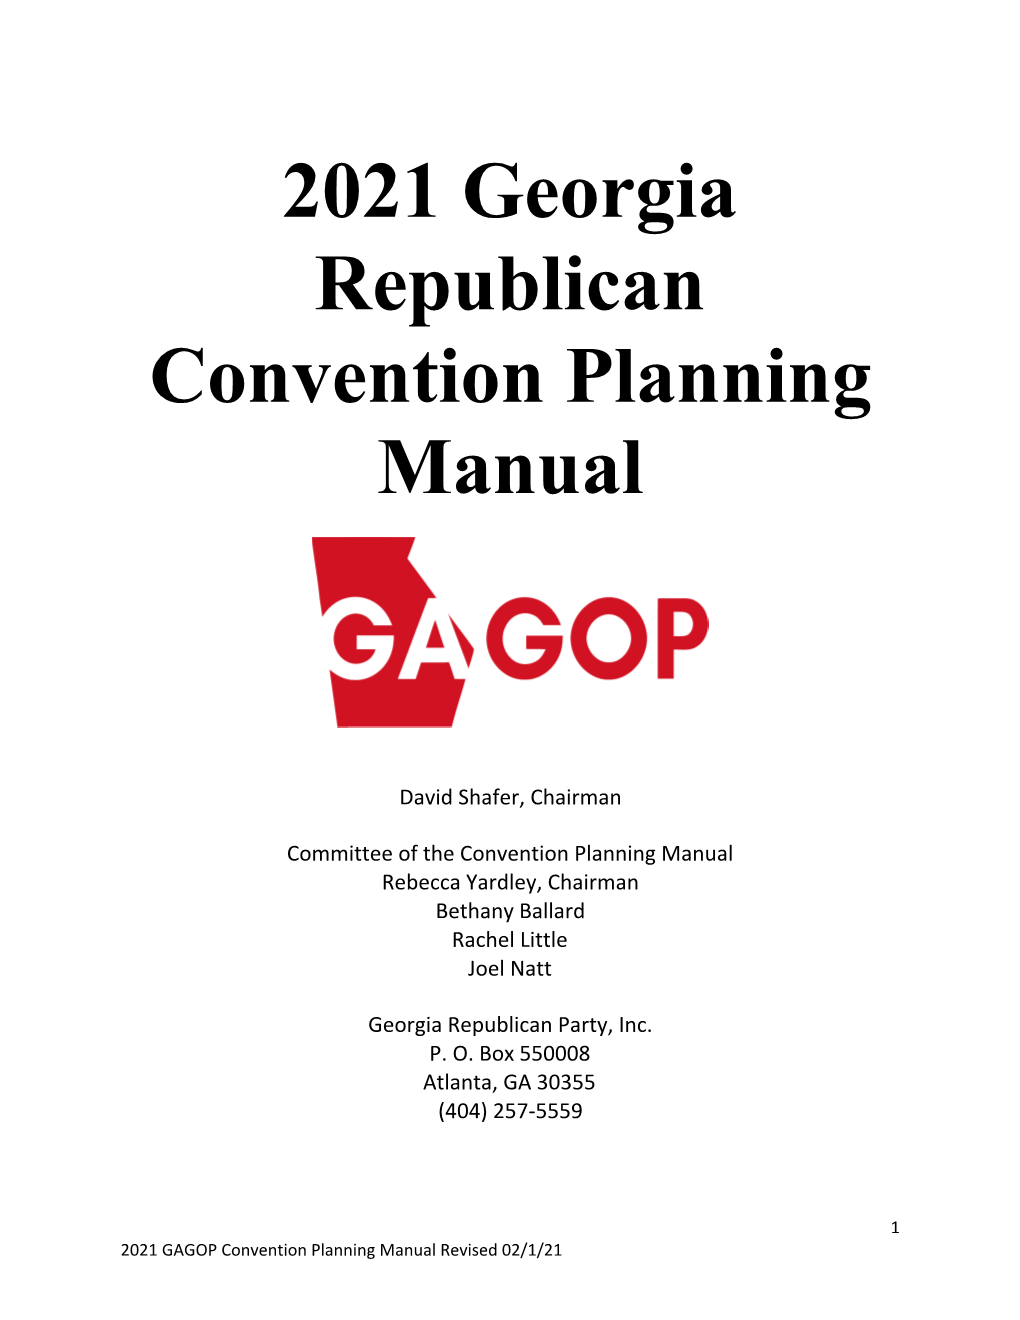 2021 Georgia Republican Convention Planning Manual